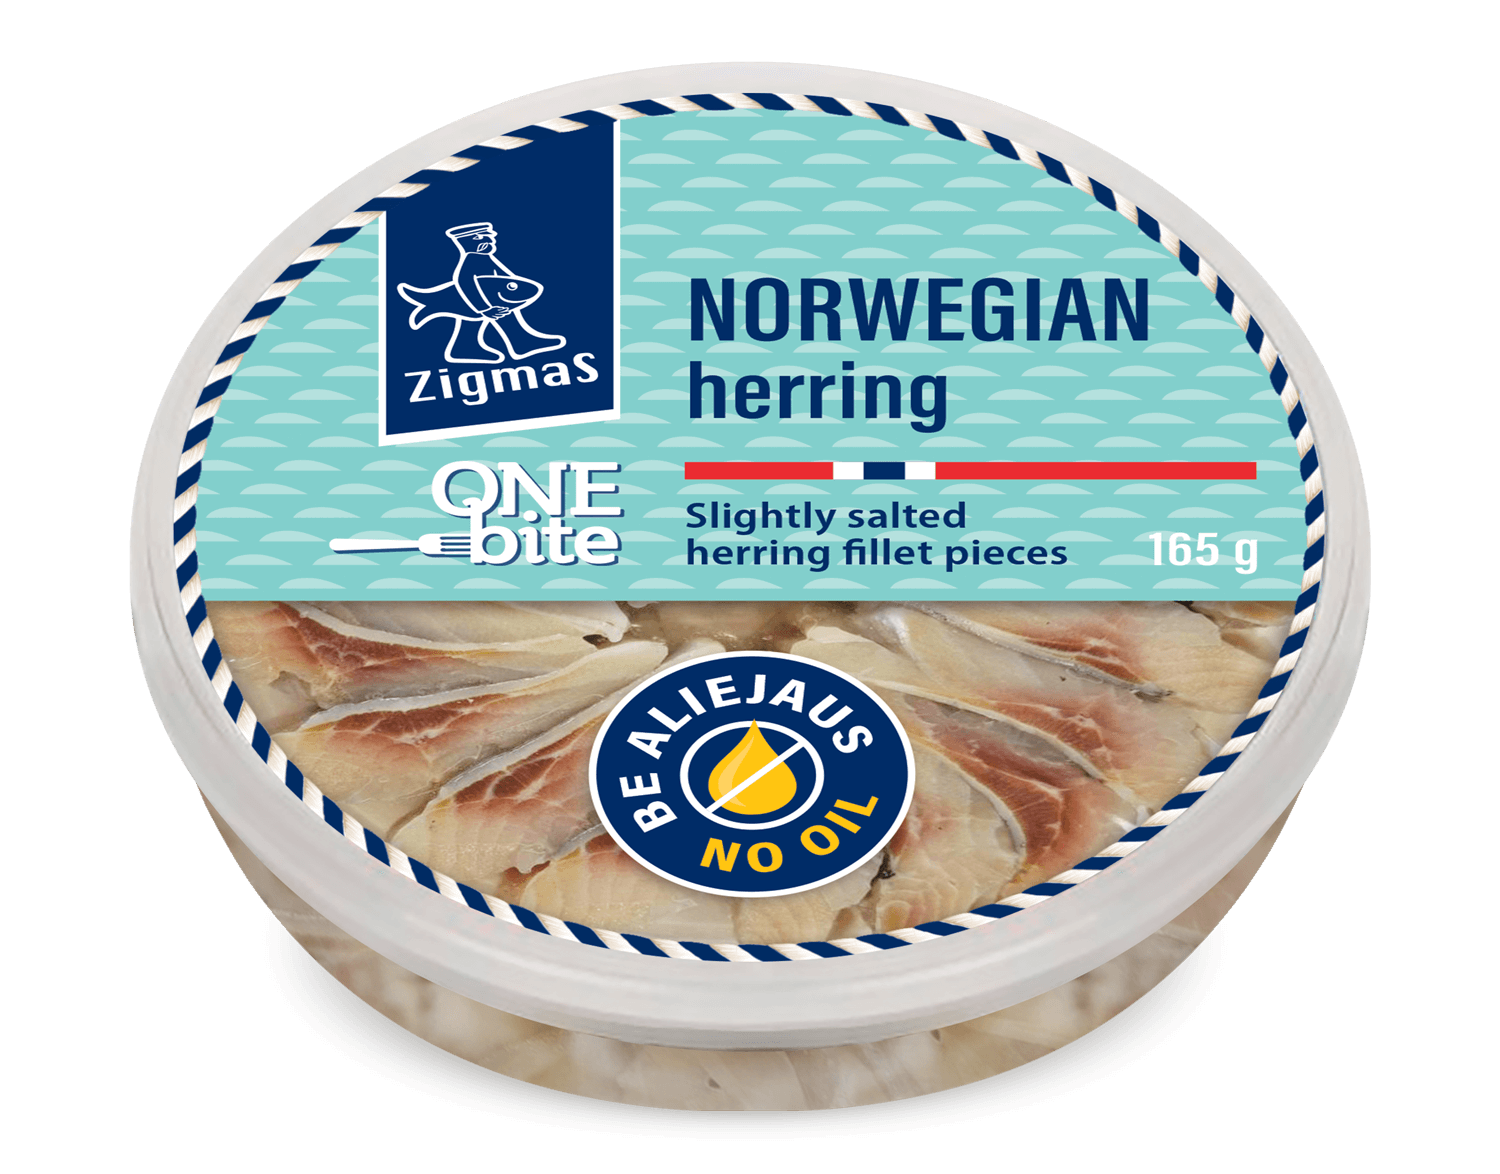 ONE BITE slightly salted Atlantic herring fillet pieces